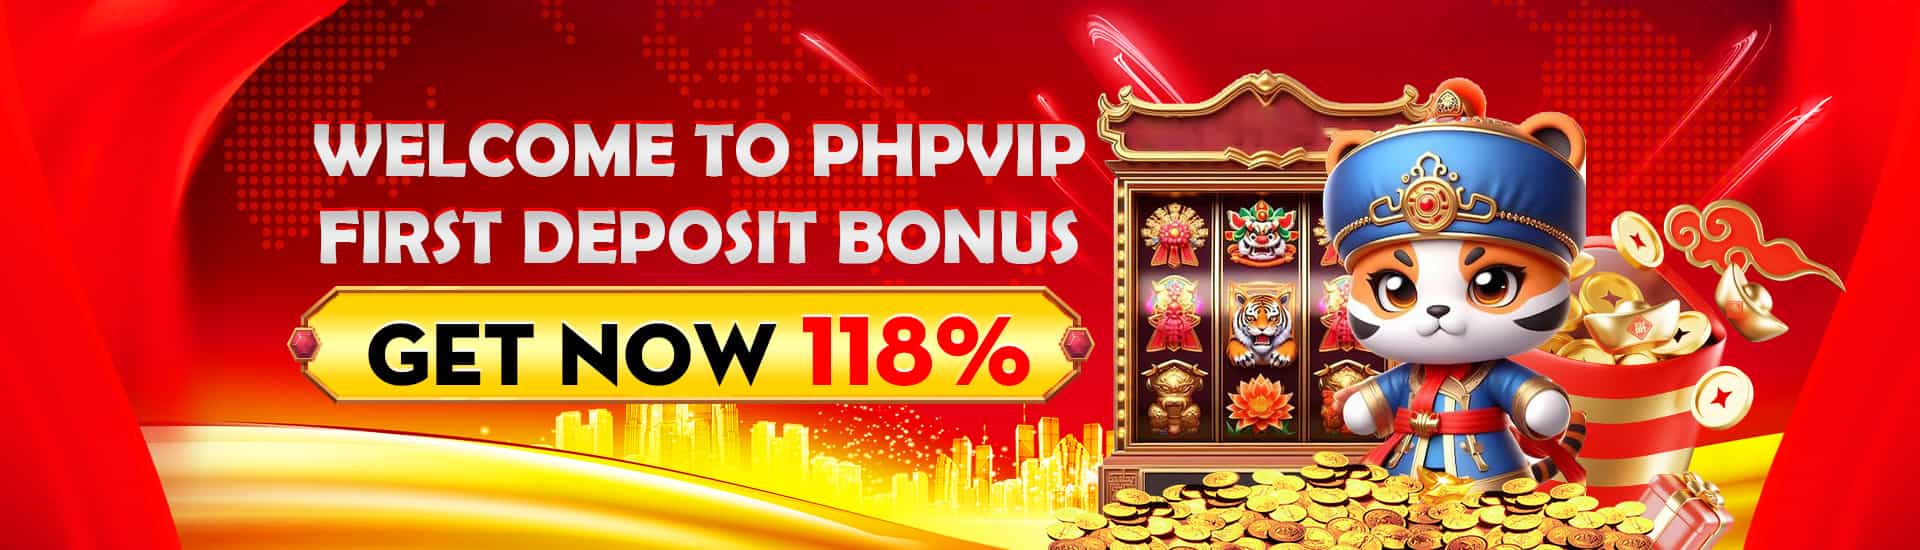 banner webcome to phpvip first deposit bonus